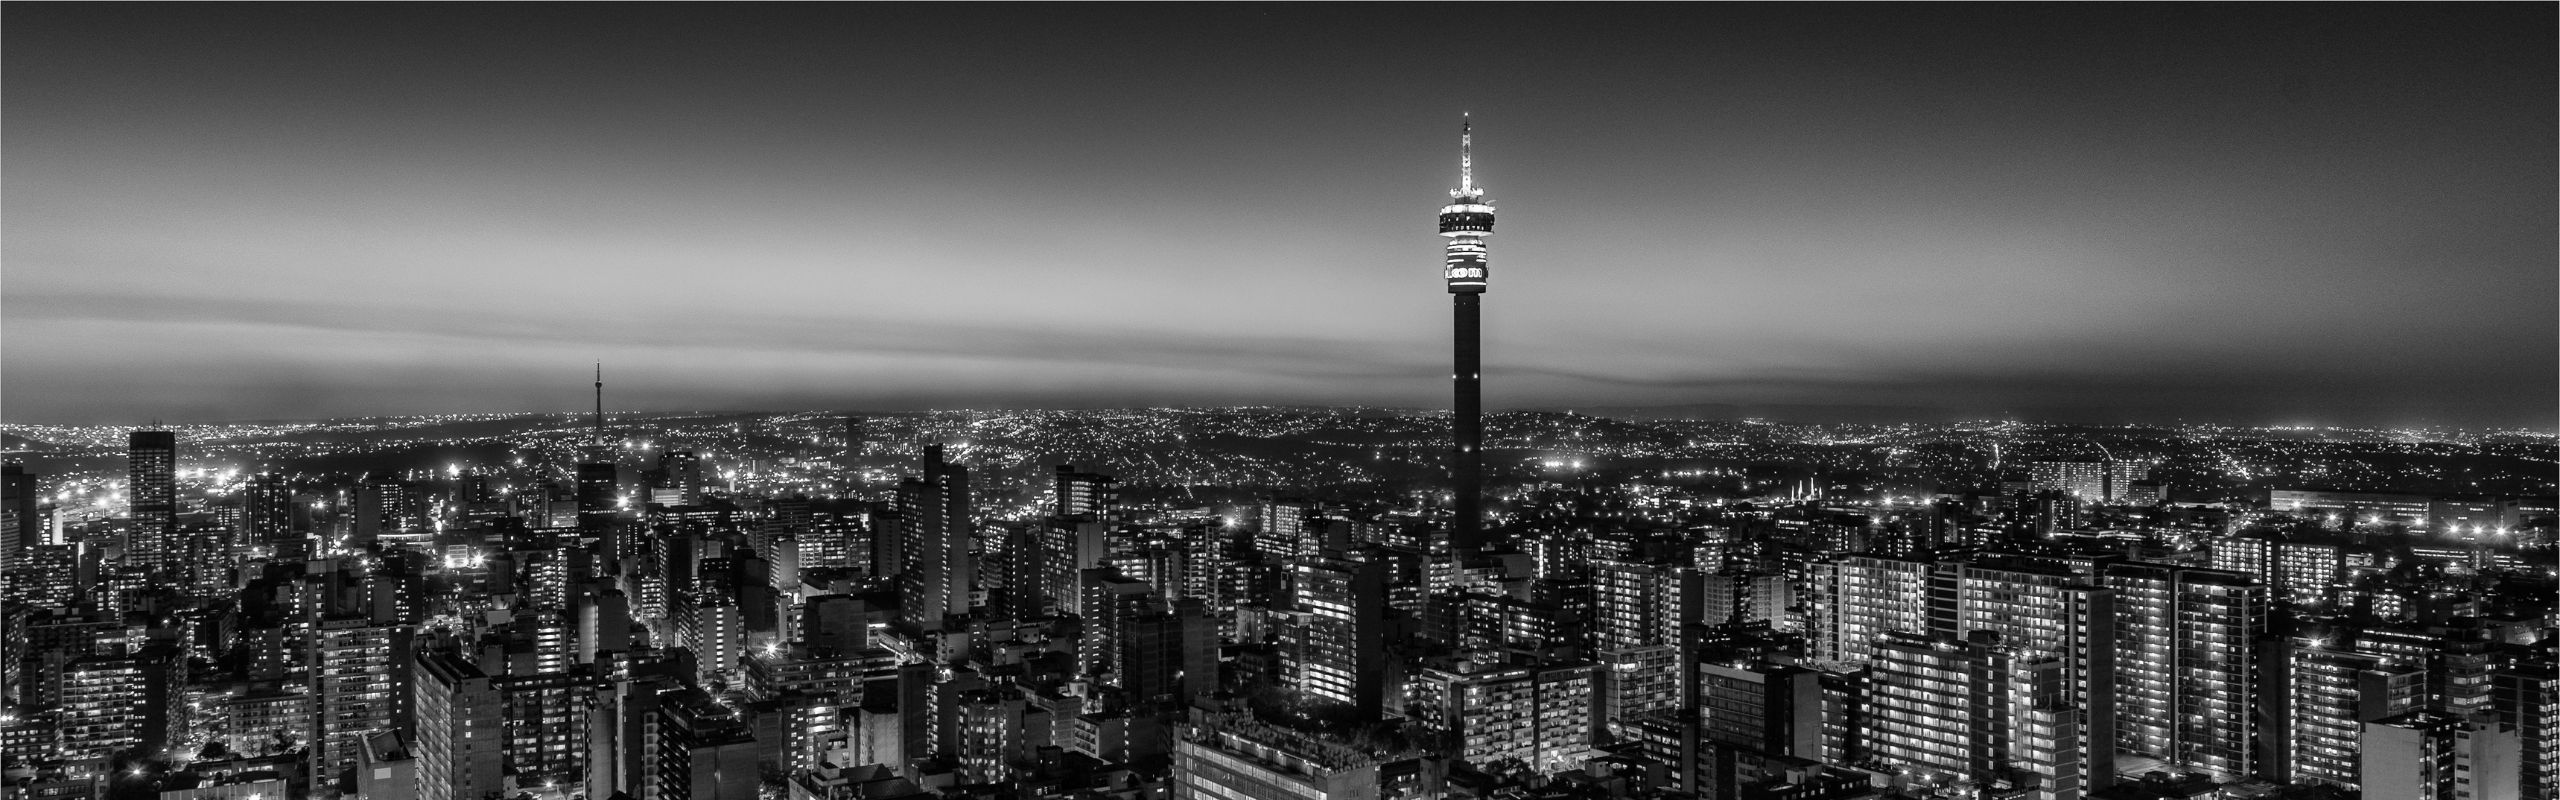 Grayscale image of Johannesburg skyline at night